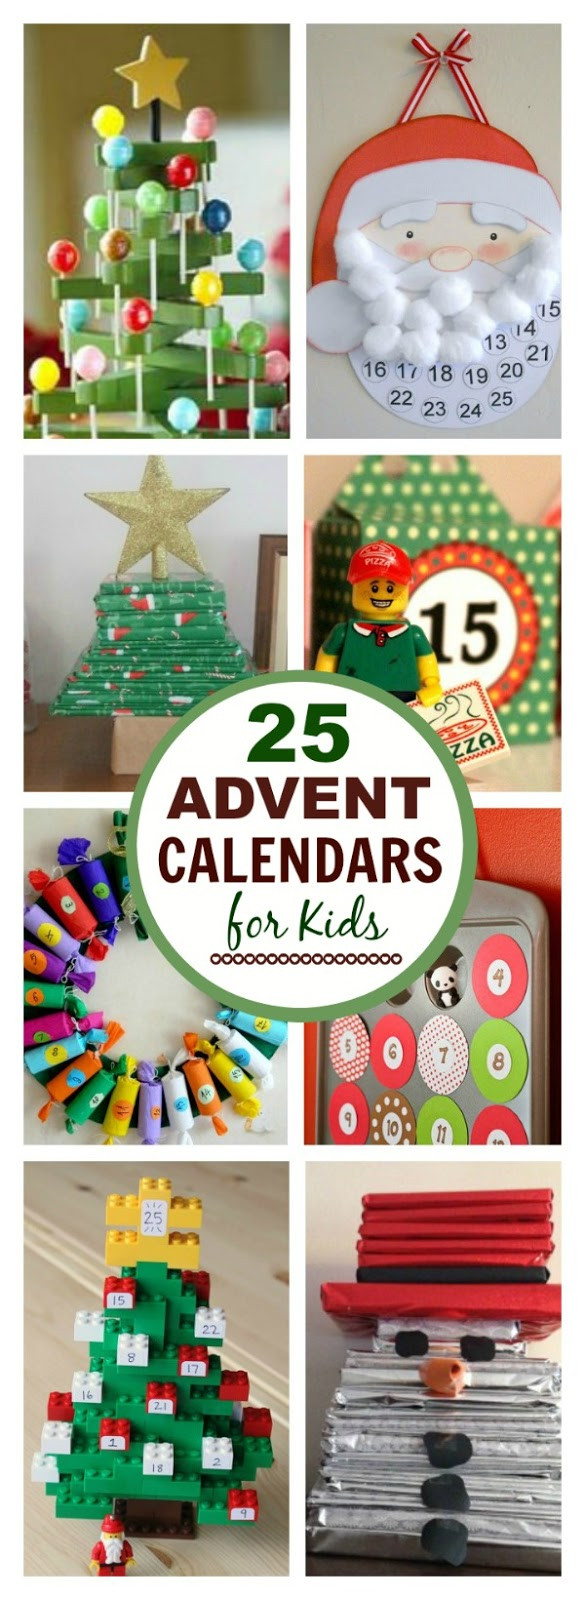 DIY Advent Calendars For Kids
 Christmas Advent Calendars for Kids